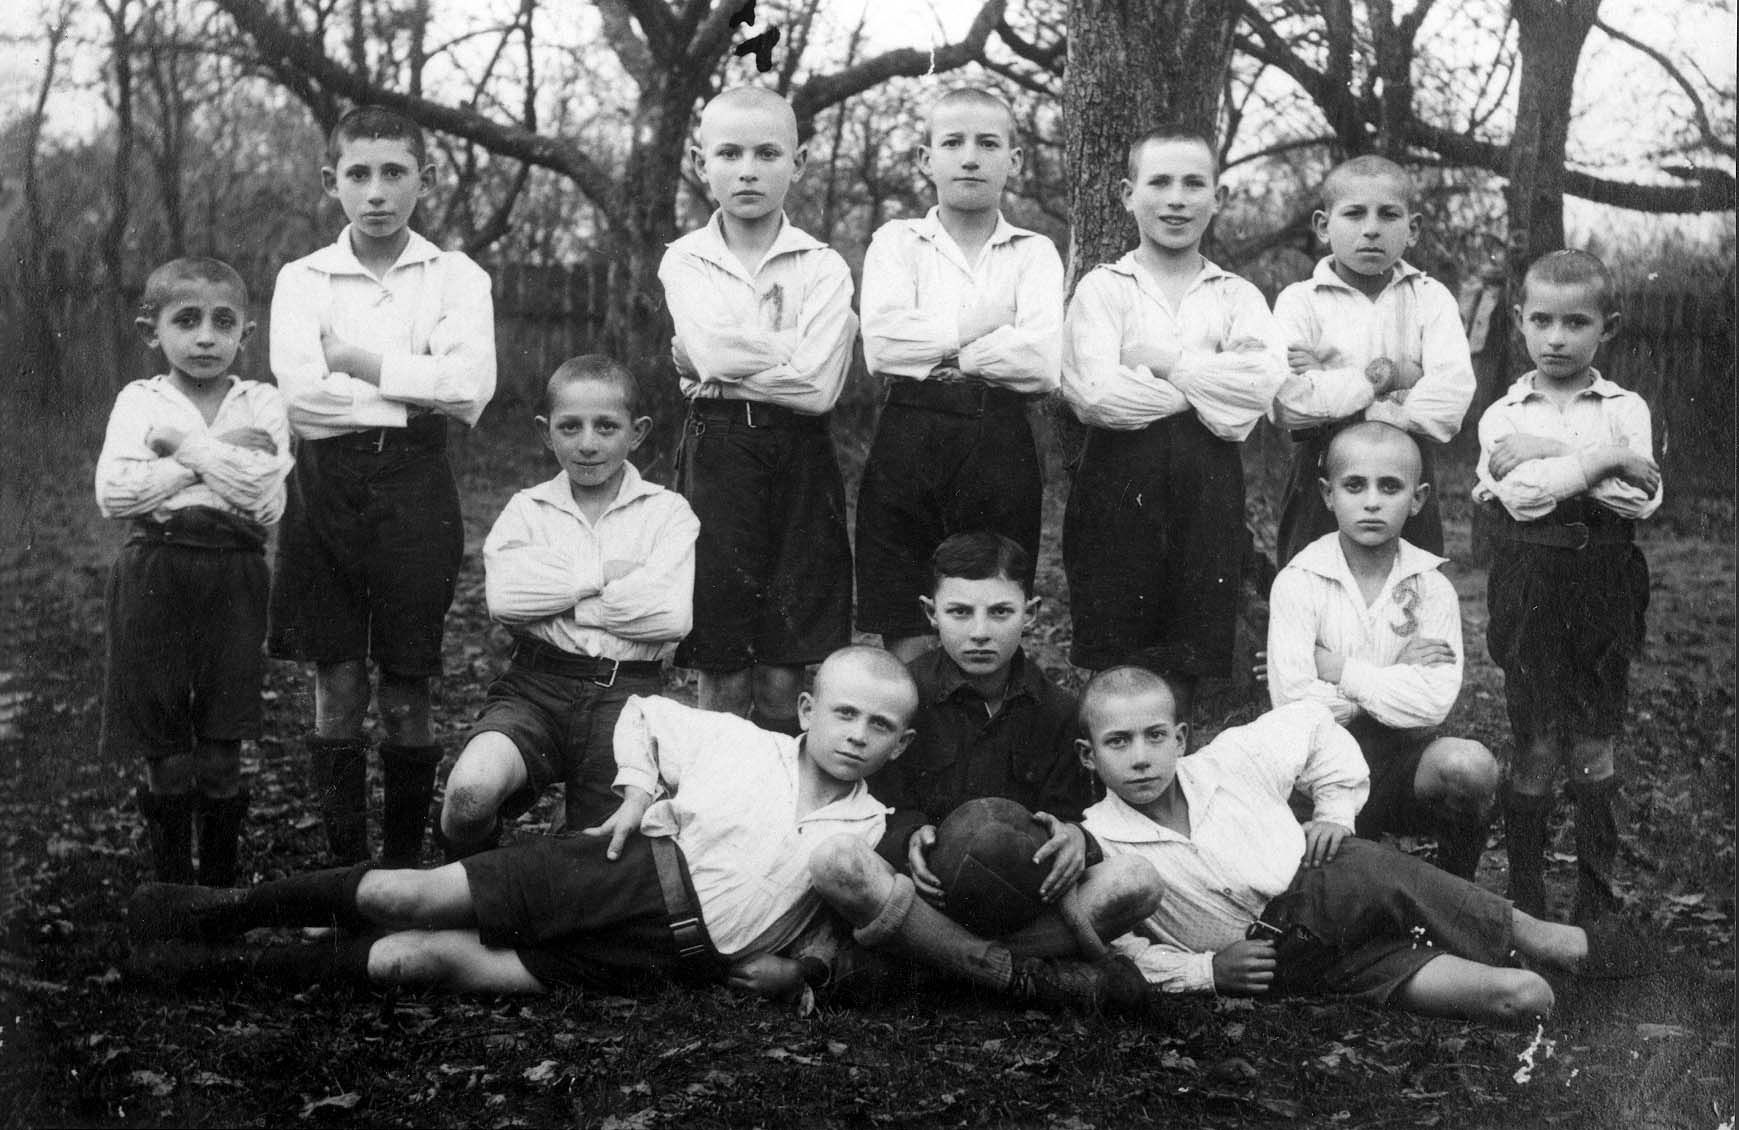 Staszow, Poland, Prewar, a football team consisting of Jewish children